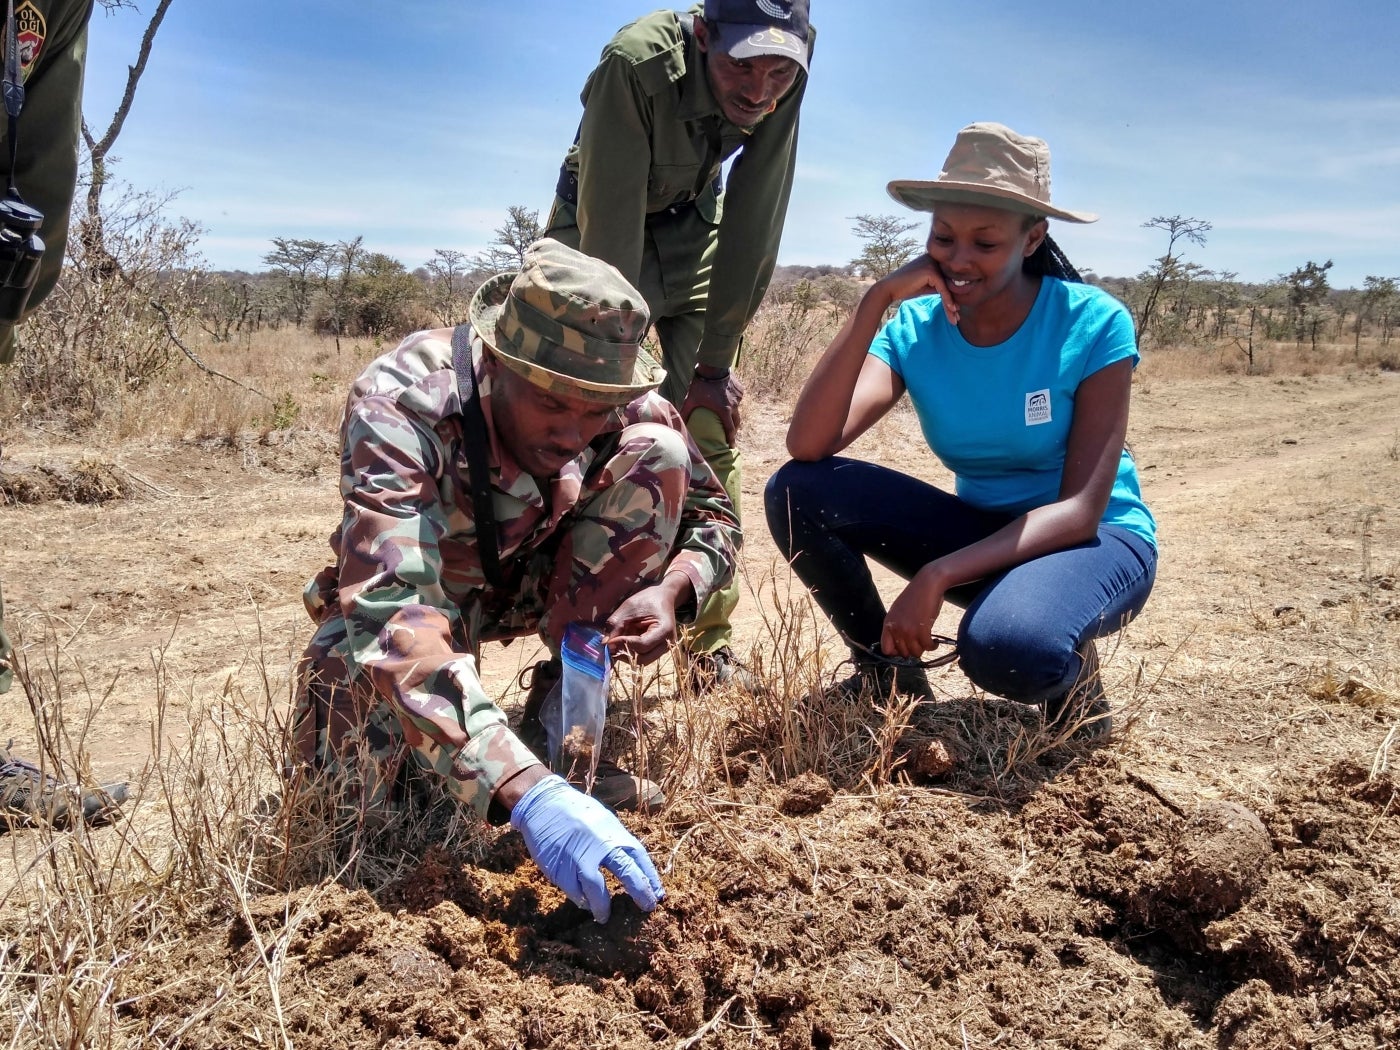 Global Health Program veterinary research fellow Dr. Maureen Wanjiku Kamau and two rangers collect a sample of rhino dung at Ol Jogi Wildlife Conservancy in Kenya